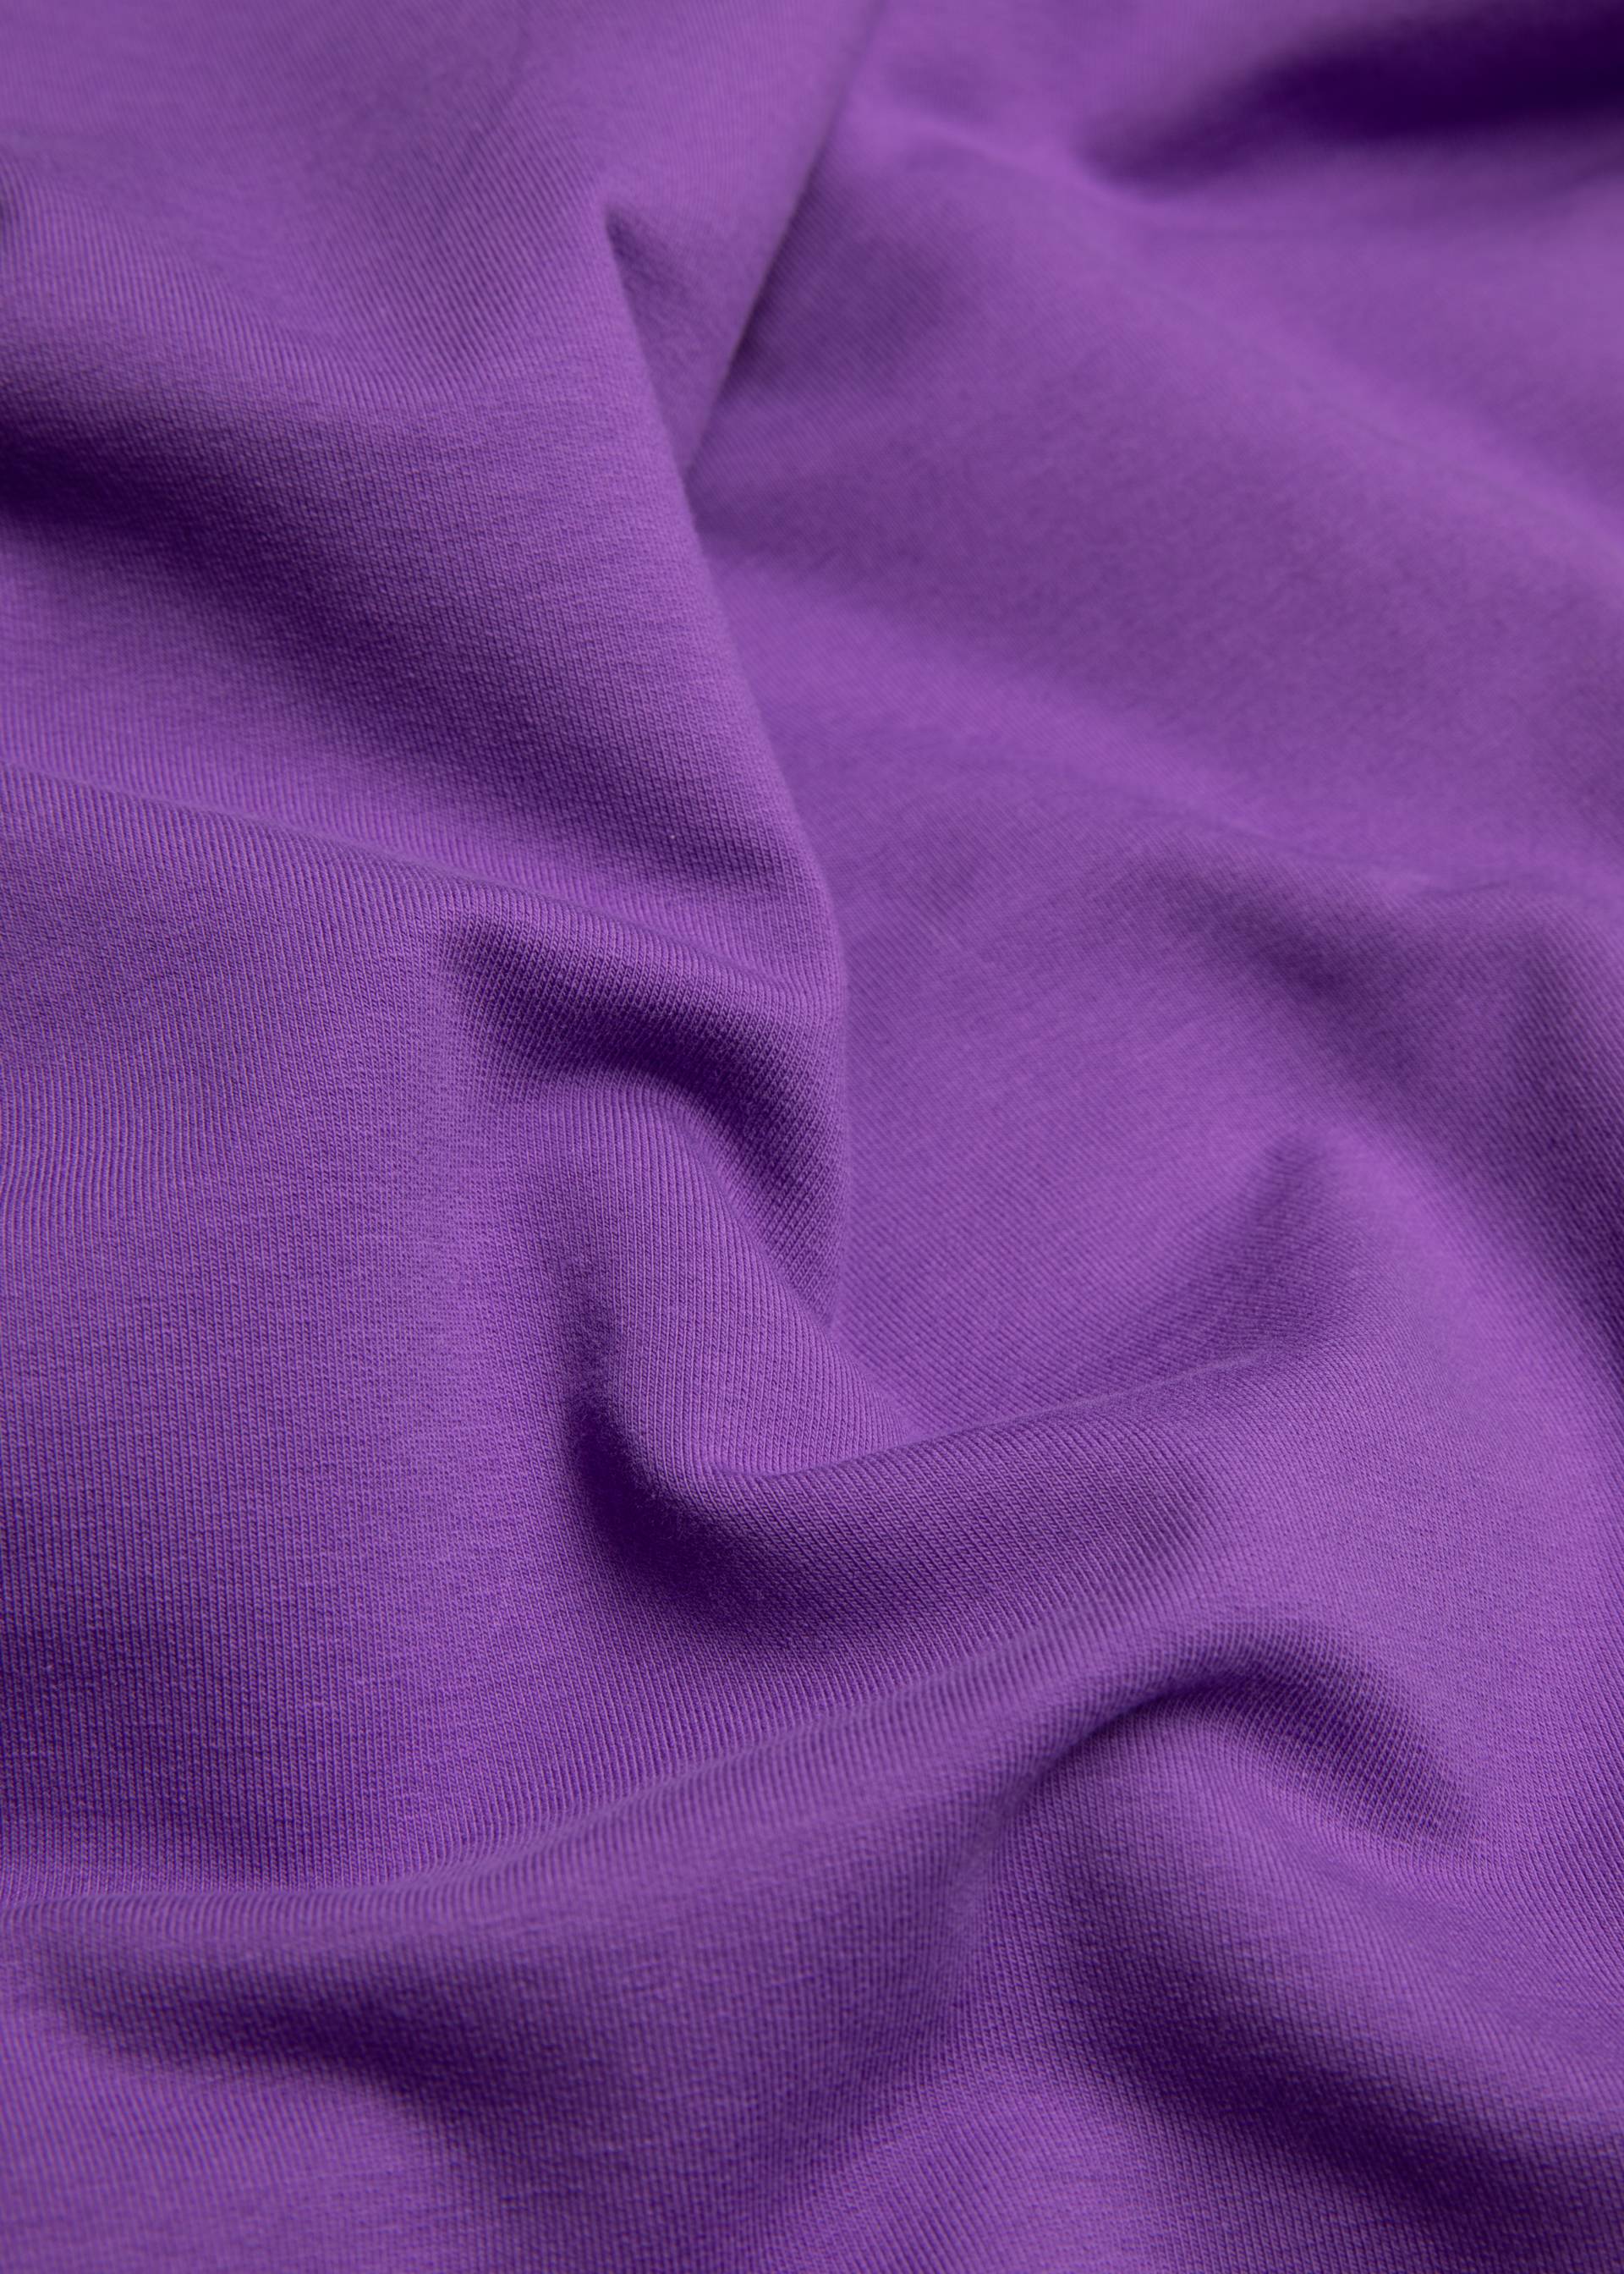 Sweatshirt Turtle Maniac, wunderbar lila, Sweatshirts & Hoodies, Purple